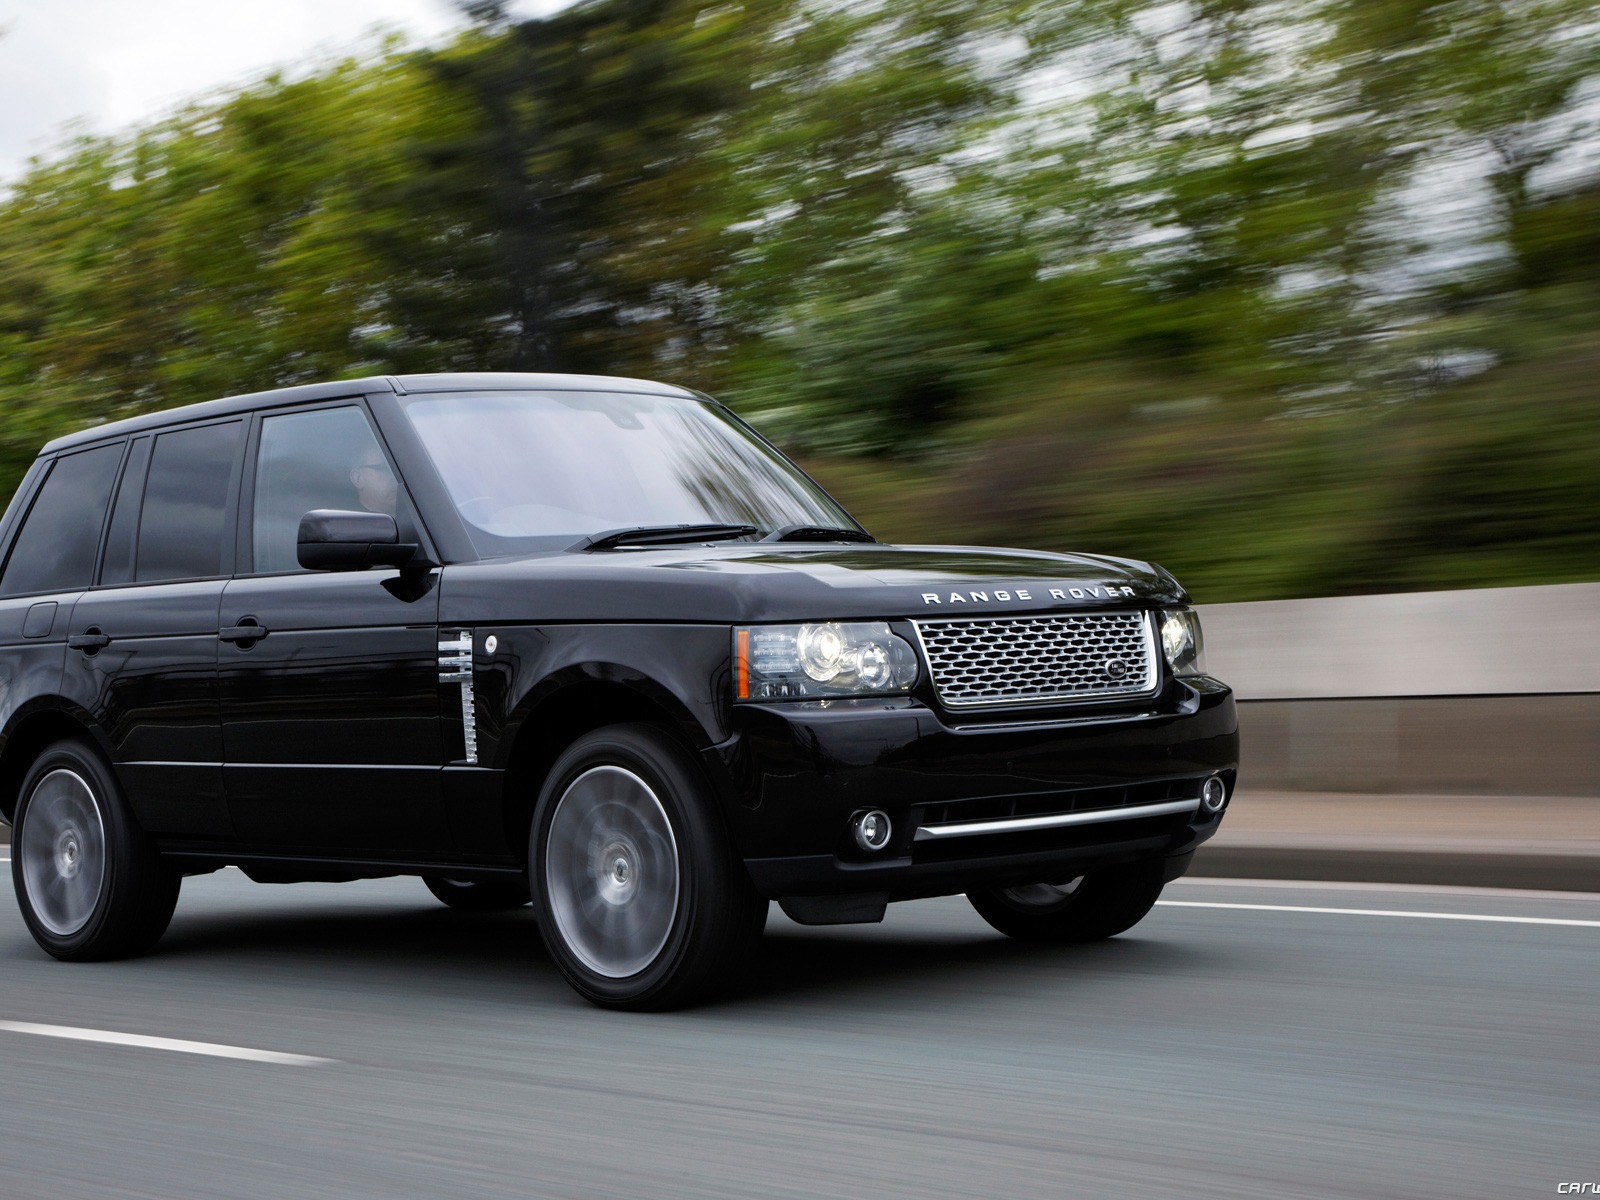 Land Rover Range Rover Black Edition - 2011 路虎16 - 1600x1200